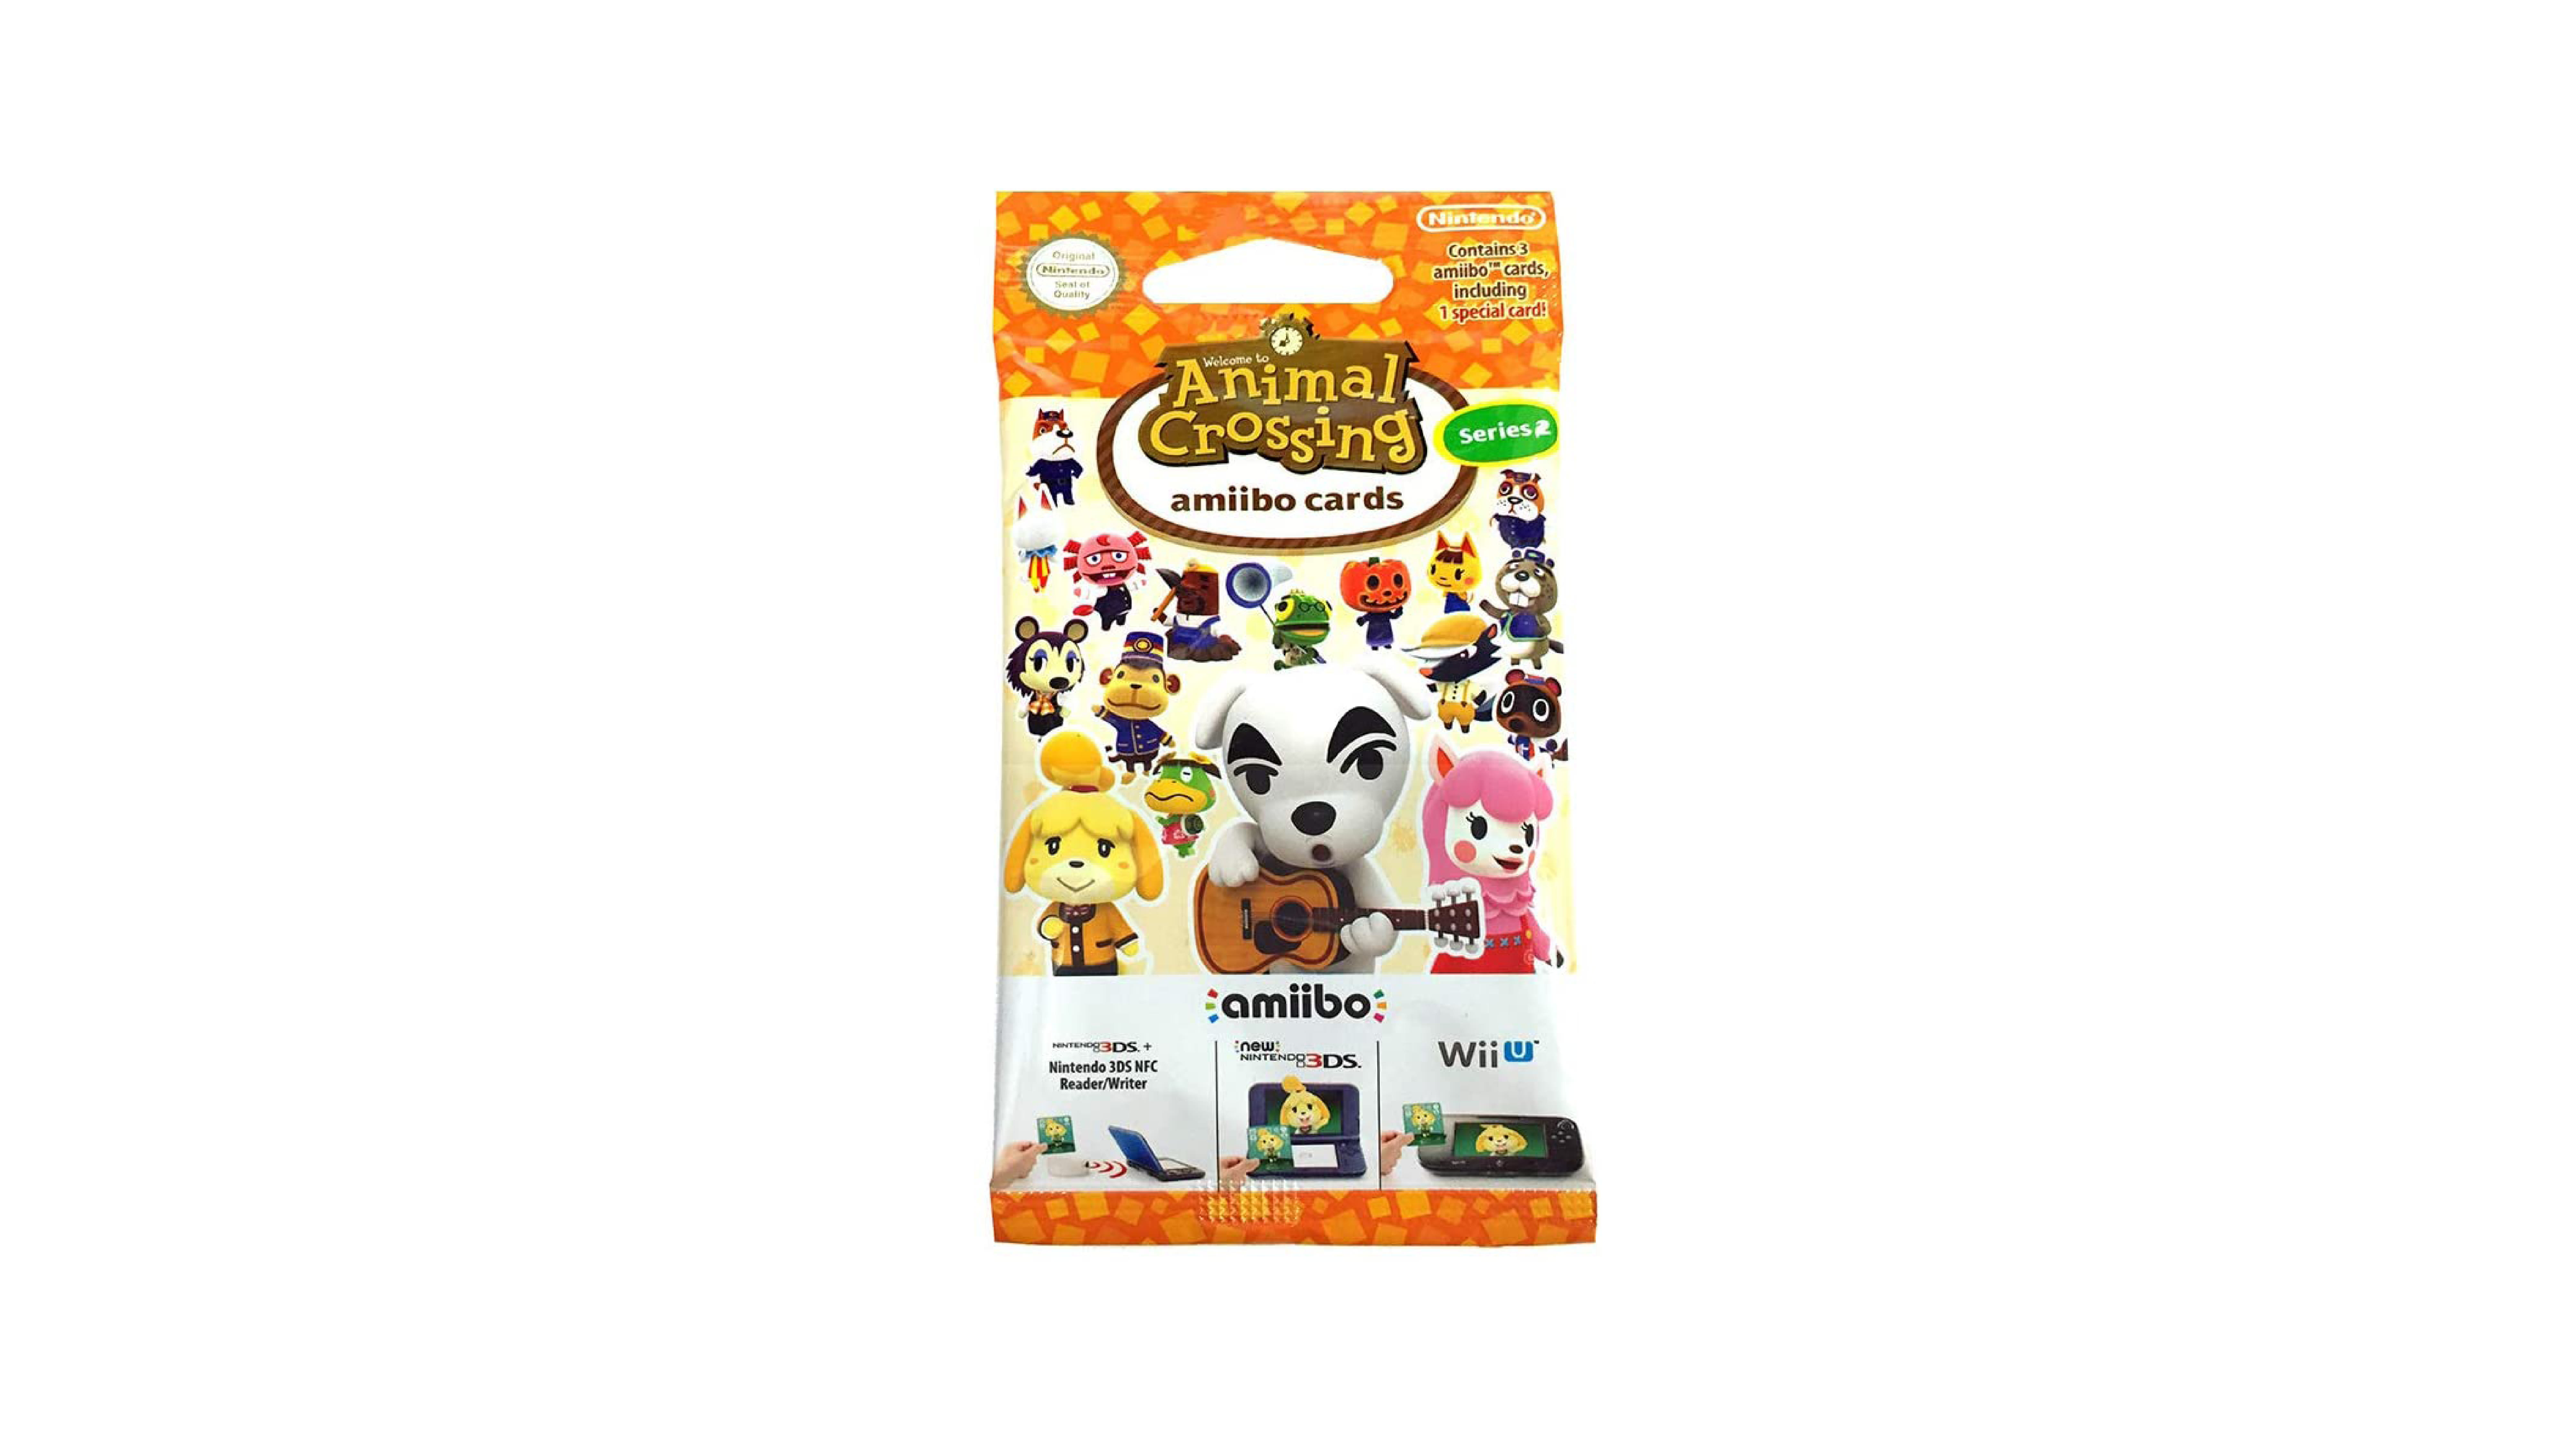 Animal Crossing amiibo cards - series 2 IMG